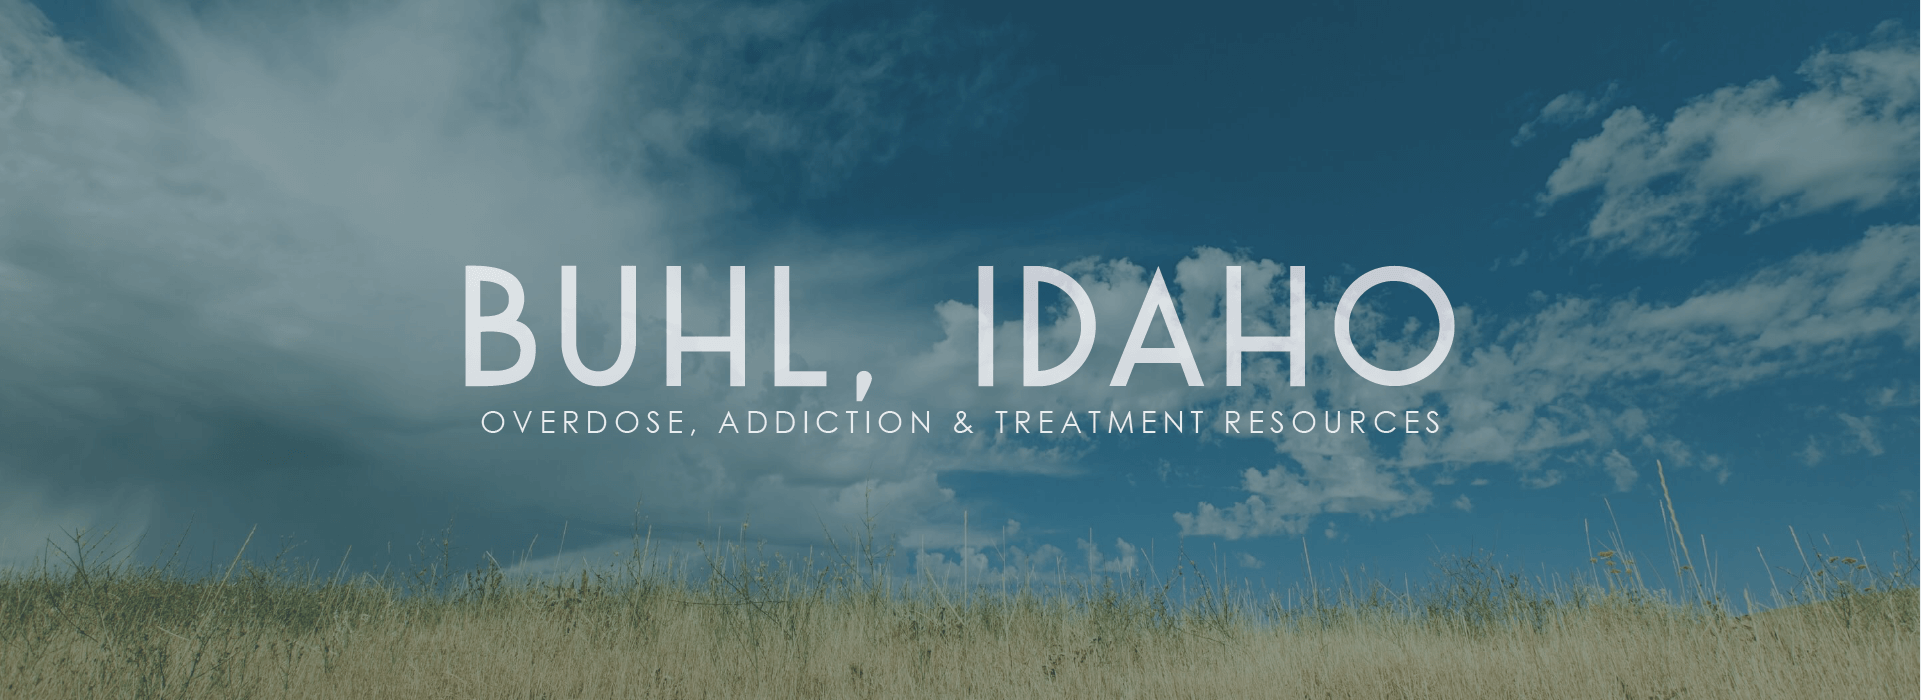 Buhl, Idaho addiction resources